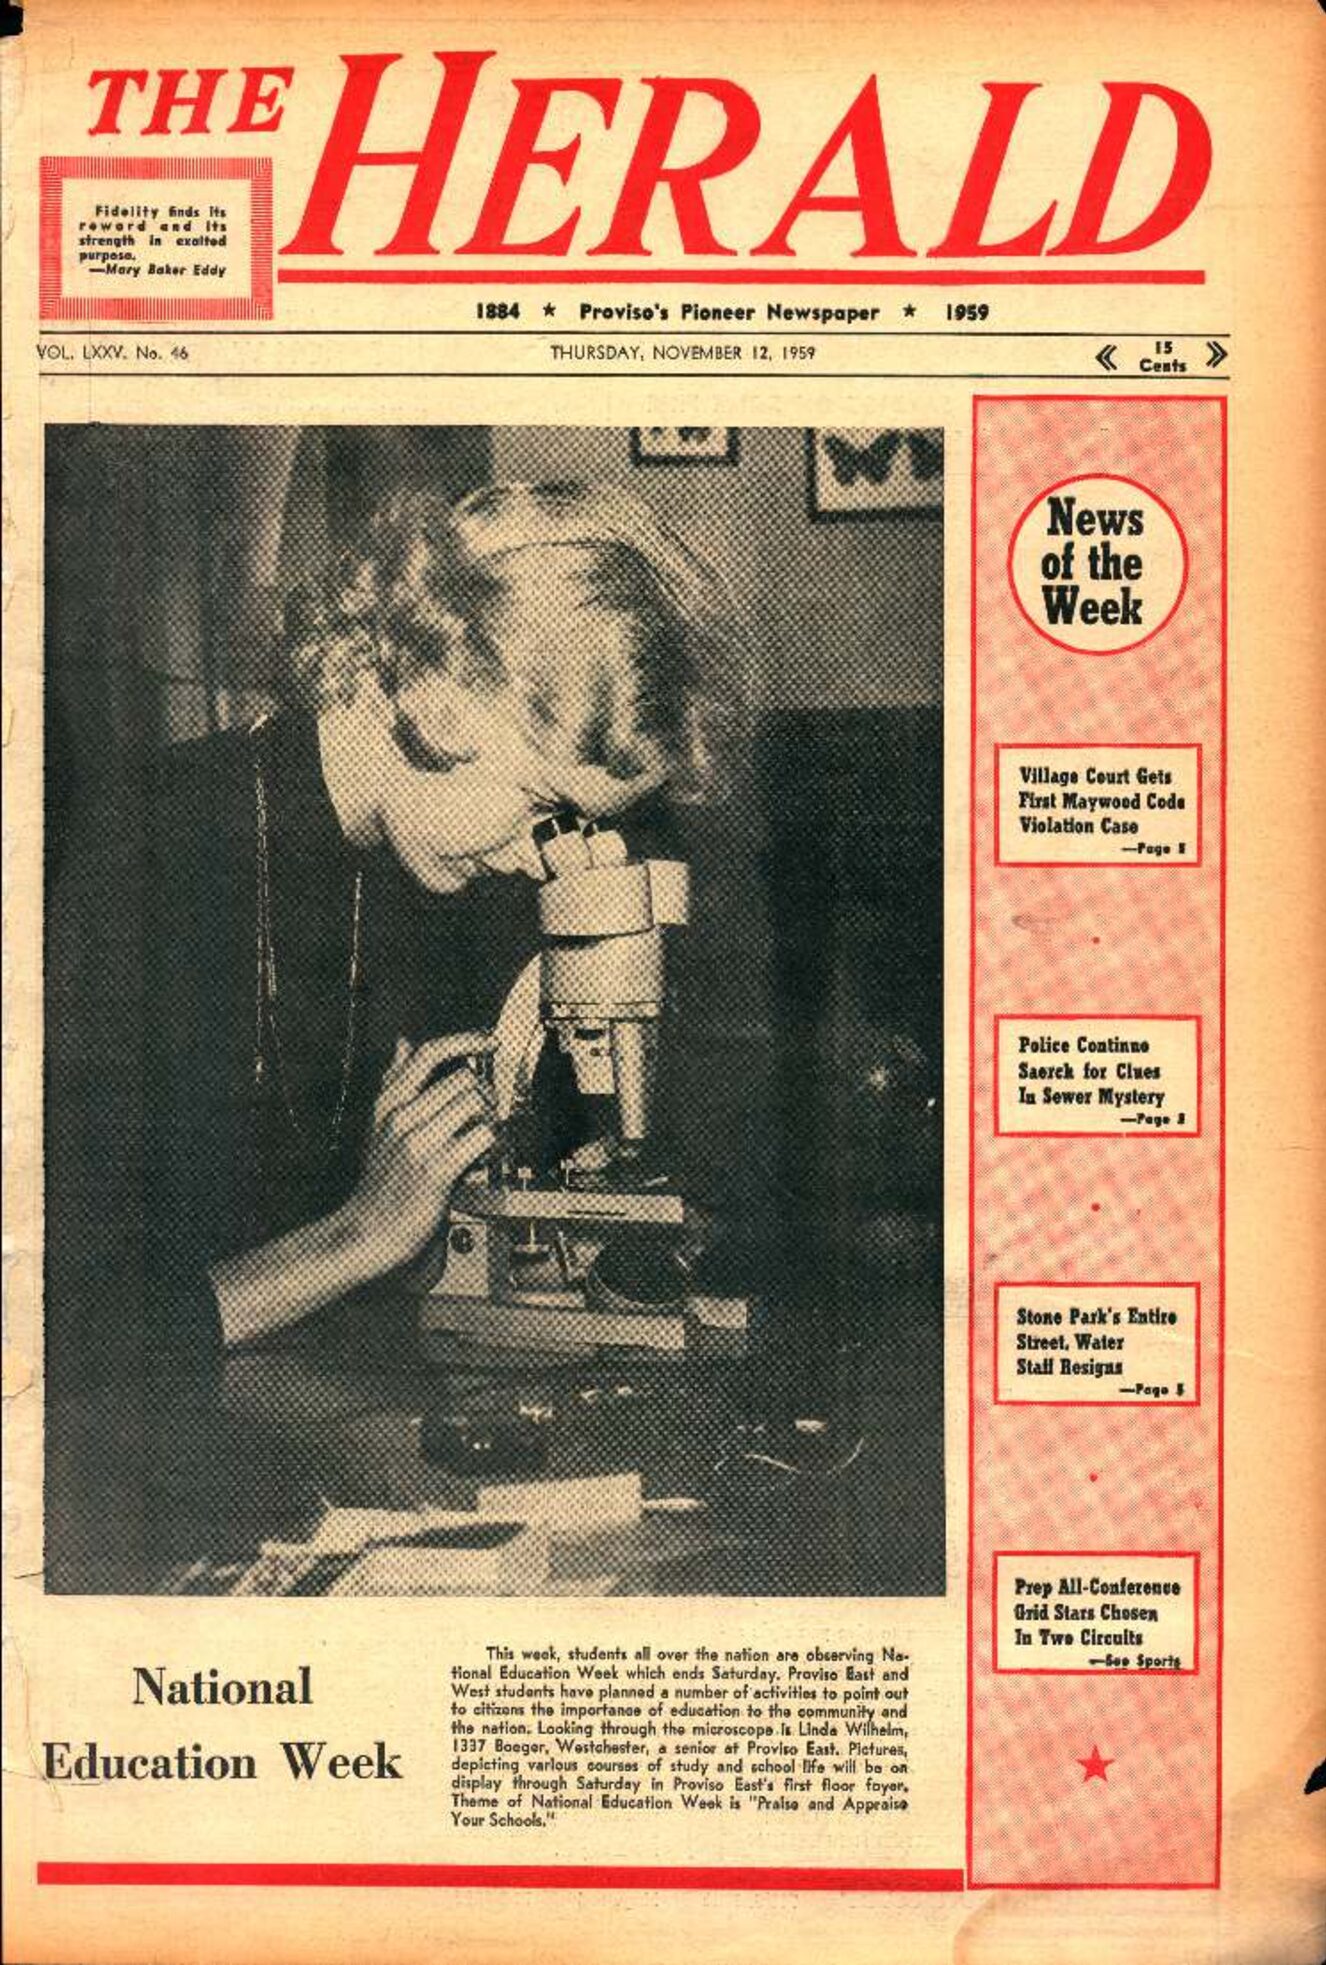 The Herald – 19591112